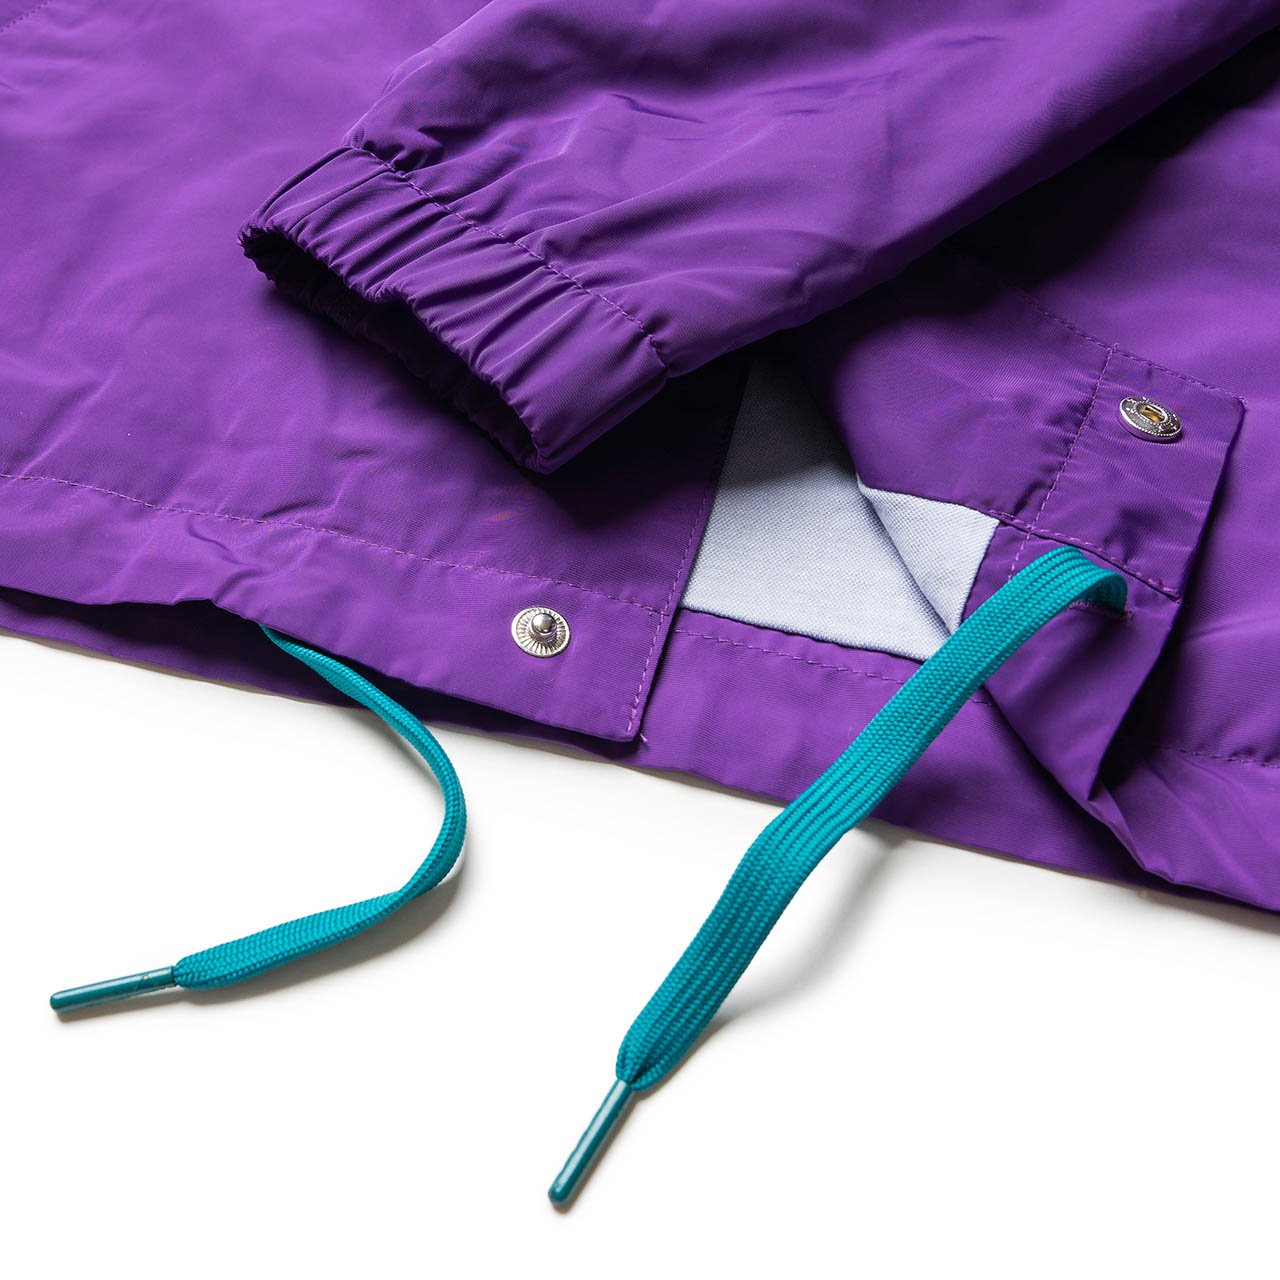 perks and mini waveform calm coach jacket (purple) - 39080-c-mprp - a.plus - Image - 5